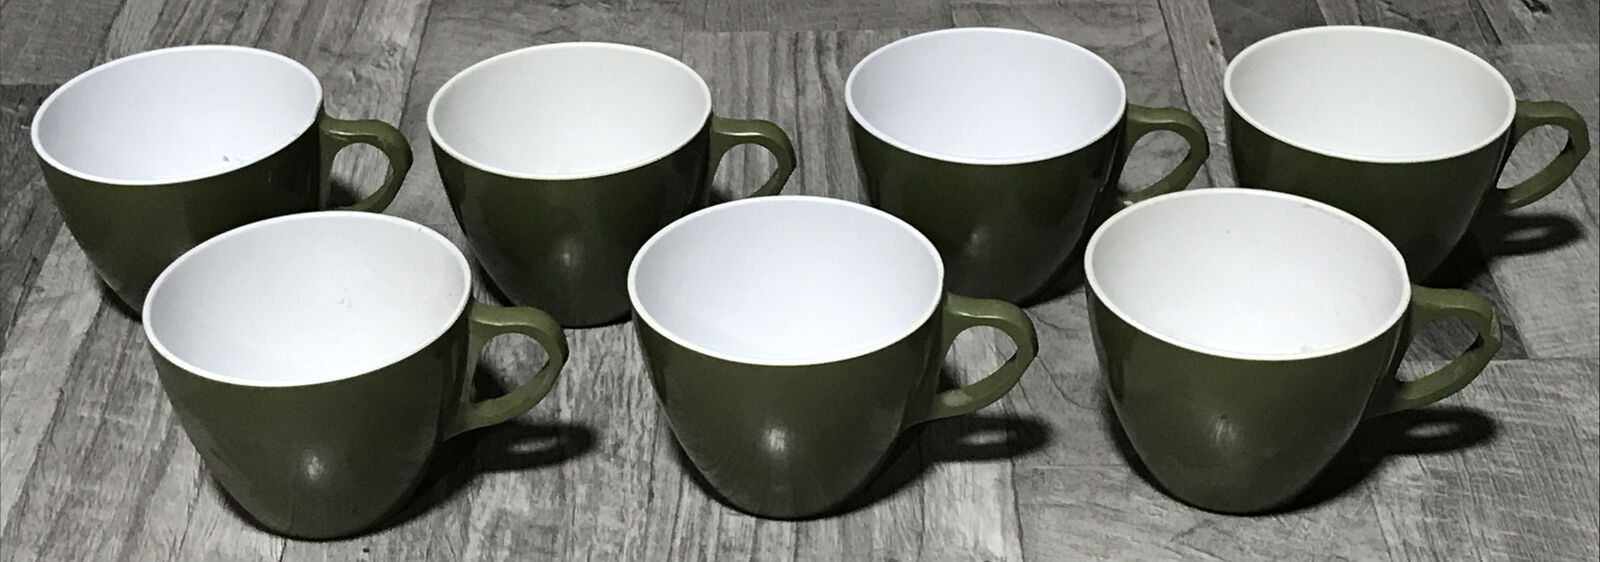 Lot of 7 Vtg Royalon Inc. Melmac Melamine Coffee Tea Cups #304 Green W19